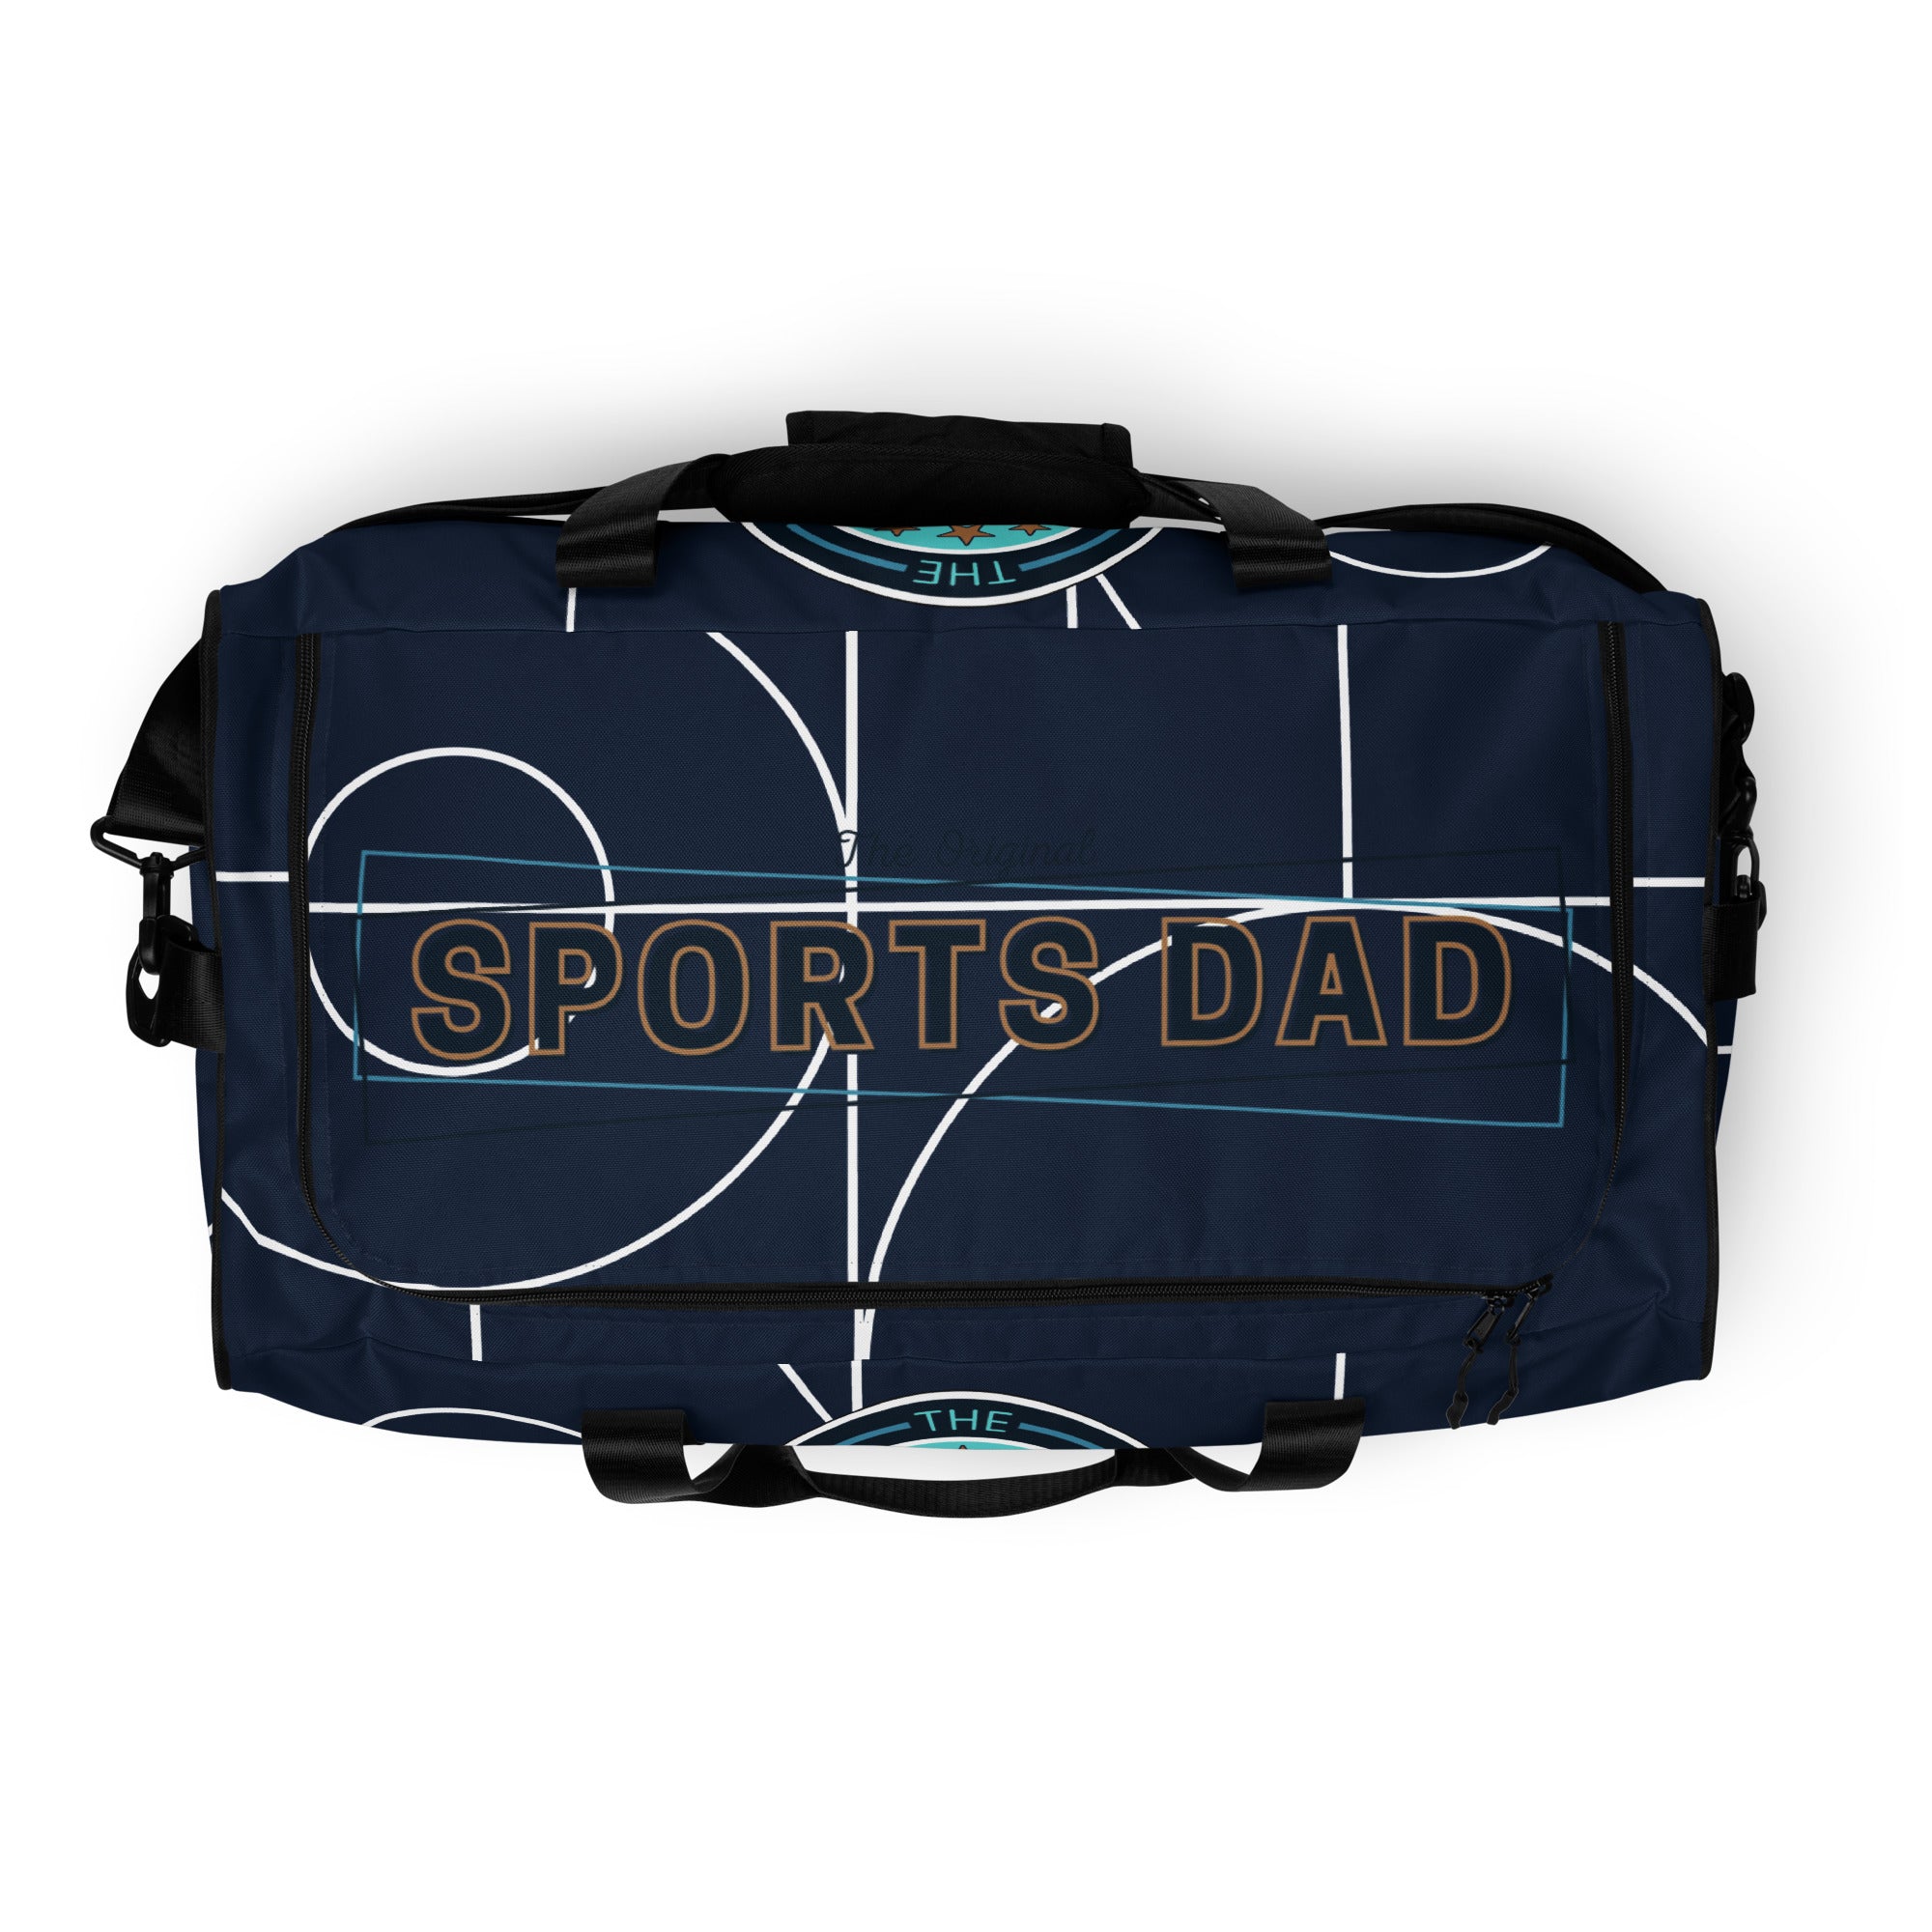 Sports Dad Ultimate Duffle Bag - Hard